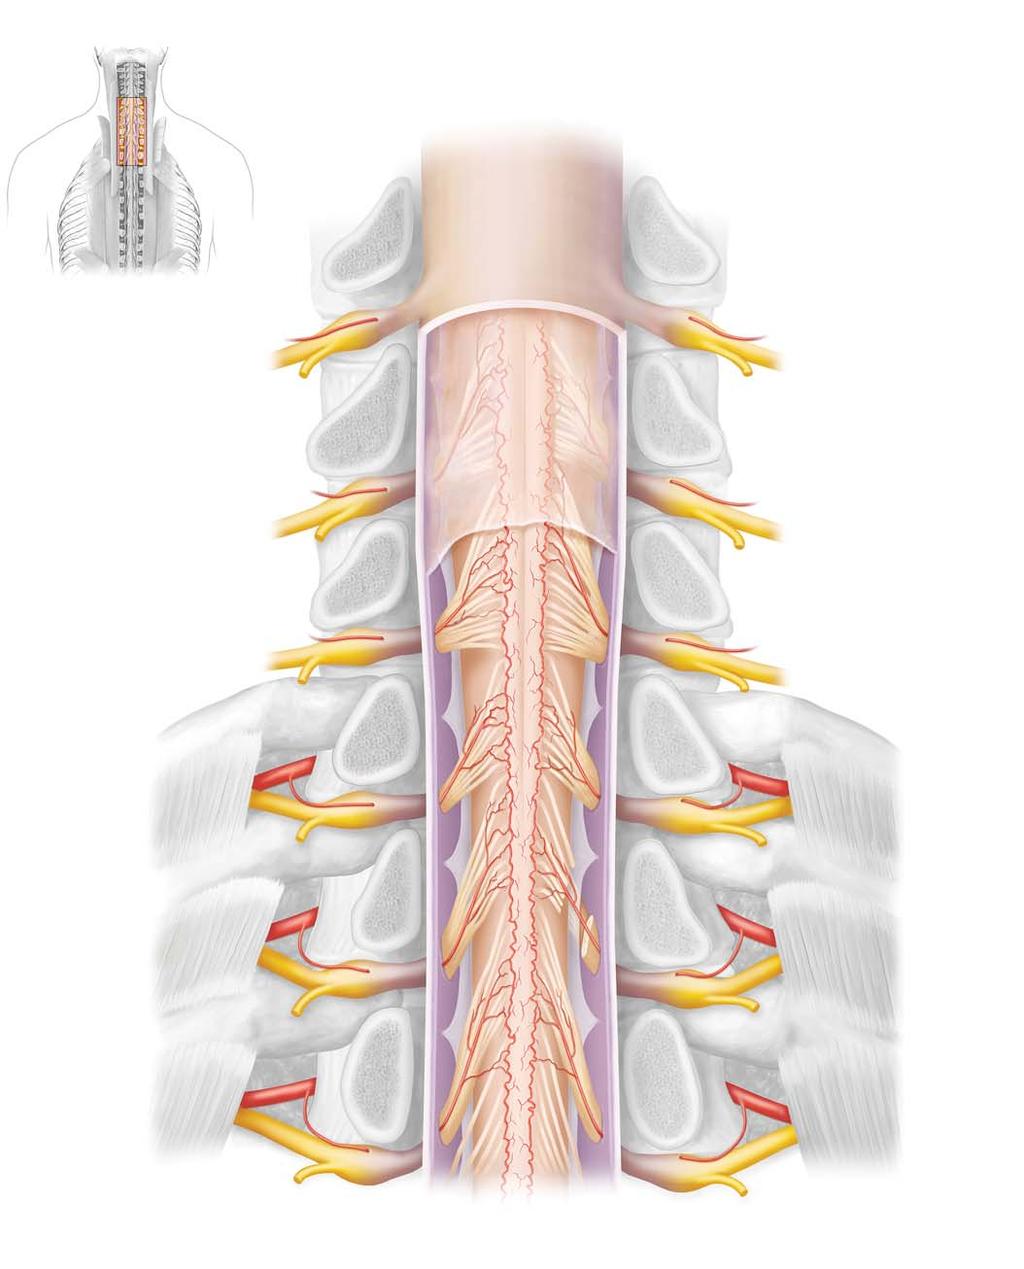 Dissection Serratus posterior superior muscle (cut and reflected) vertebra (cut) vertebra (cut) Dorsal root ganglion spinal nerve C5 pedicle (cut) Dura mater Dura and arachnoid mater (cut and